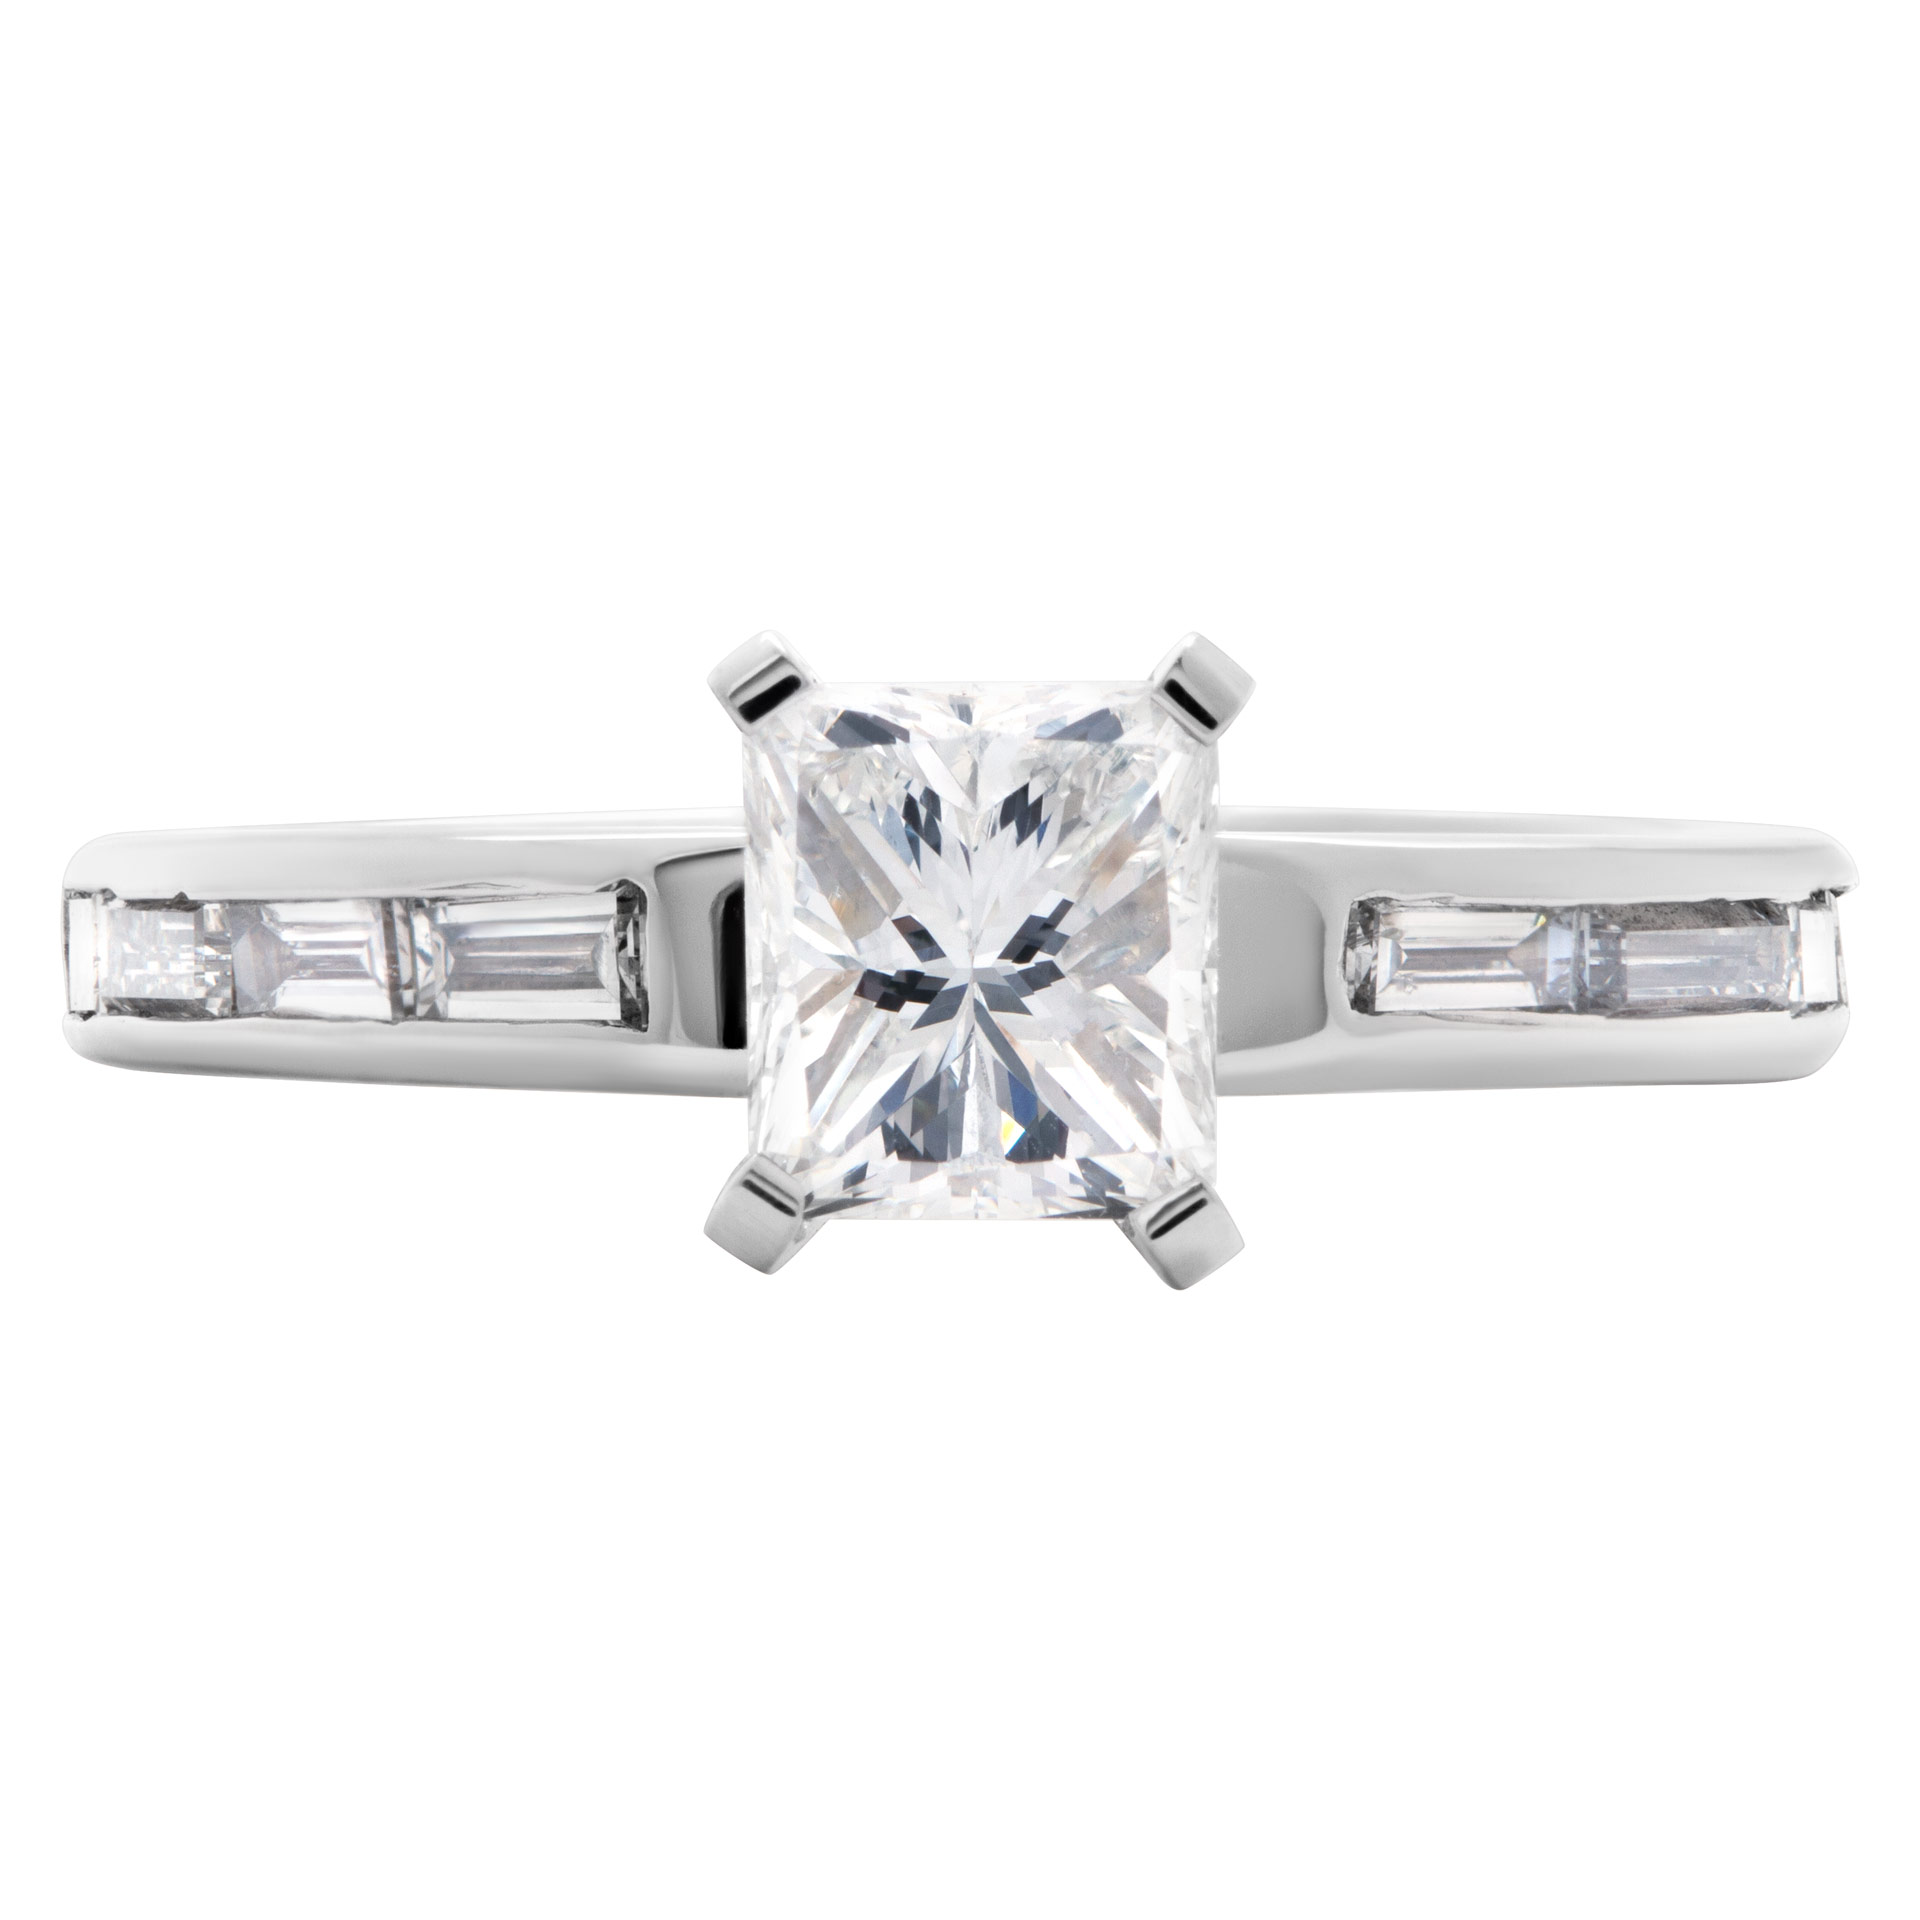 GIA certified cut-cornered rectangular modified brilliant cut diamond ring image 2